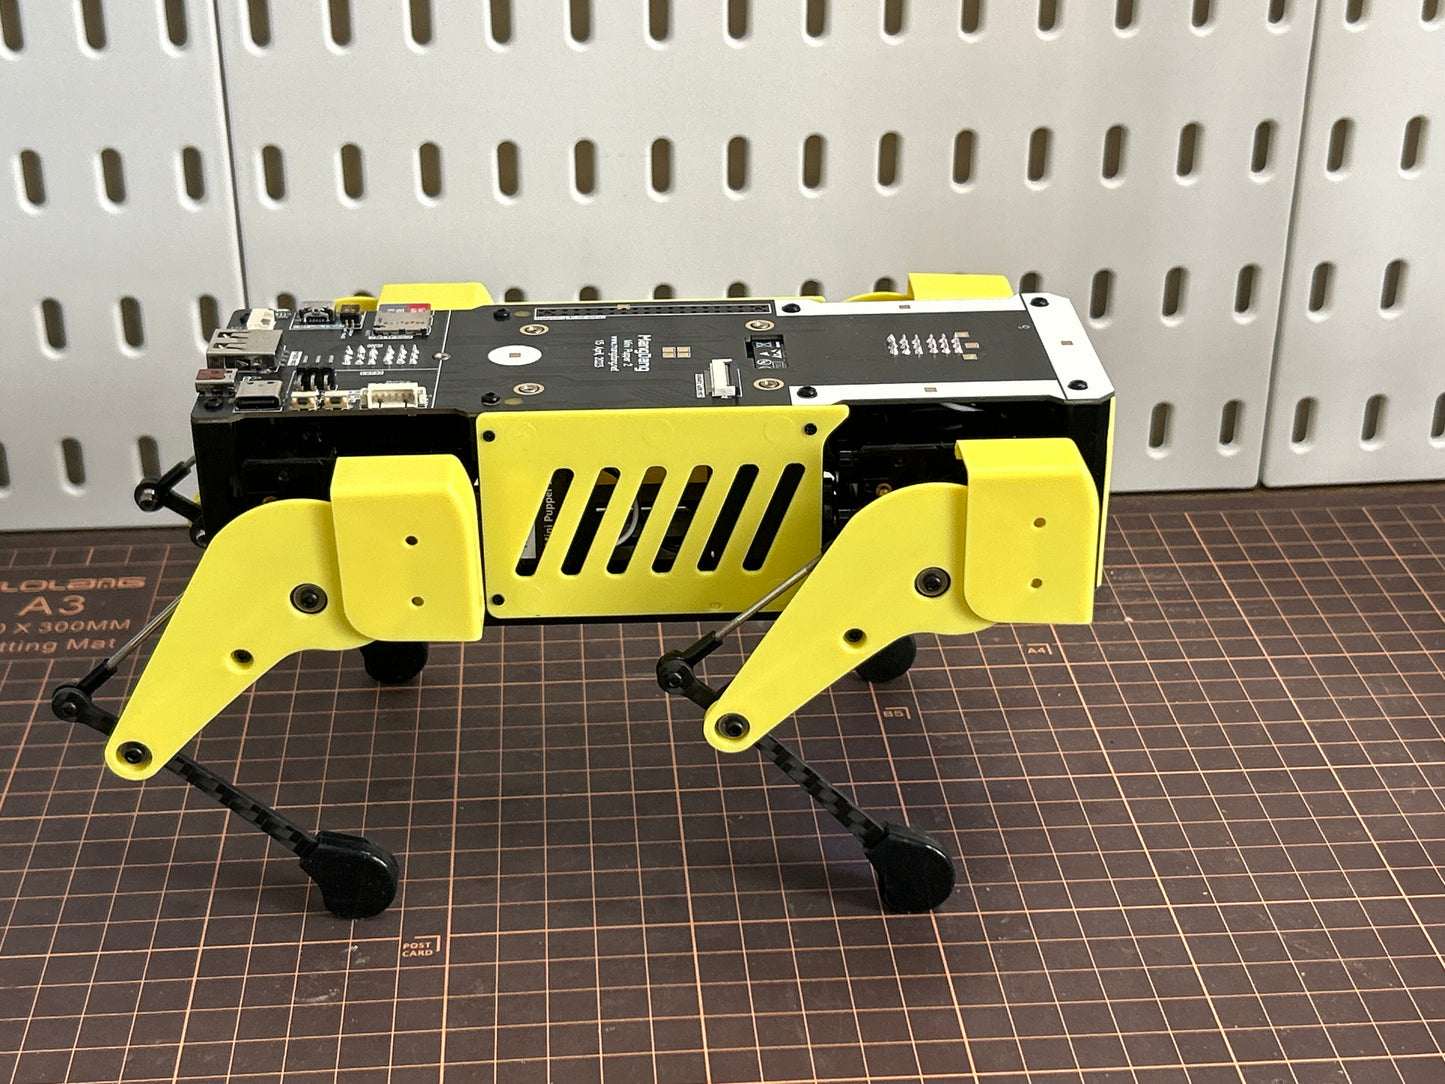 Mini Pupper 2 for Maker:  Open-Source, AI Quadruped Robot